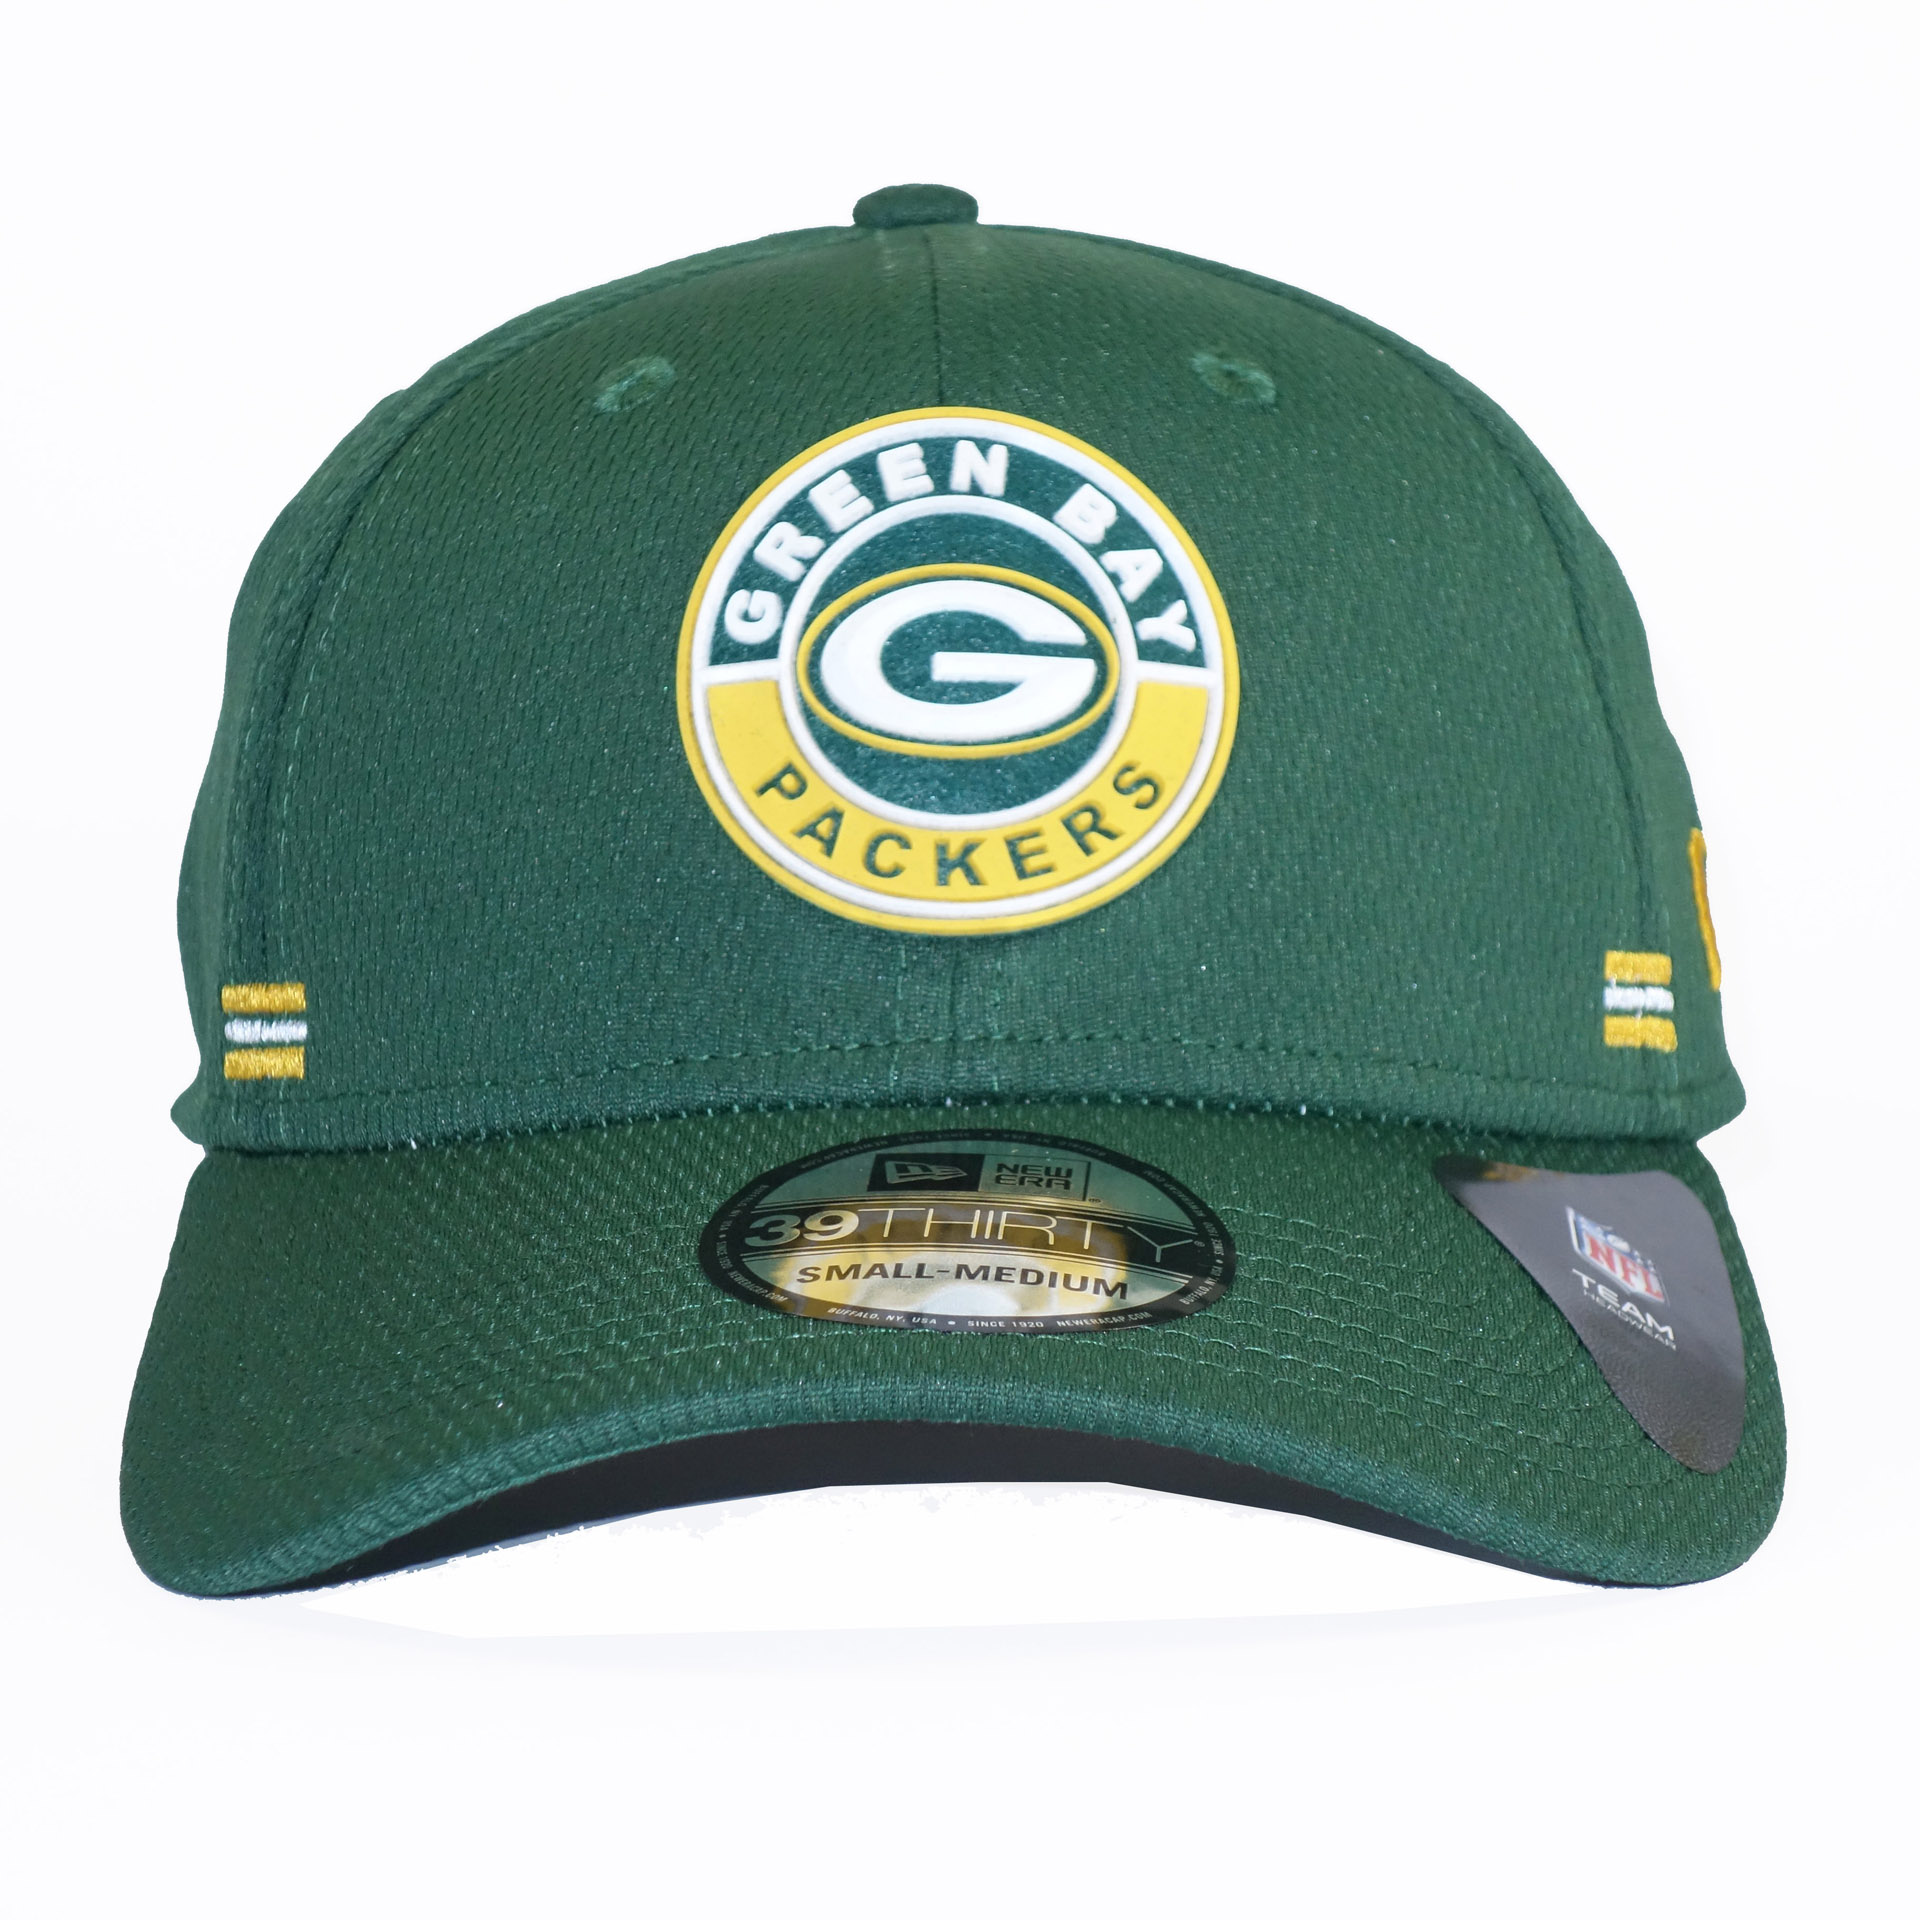 NFL New Era Cap Green Bay Packers Cap Sizes S/M